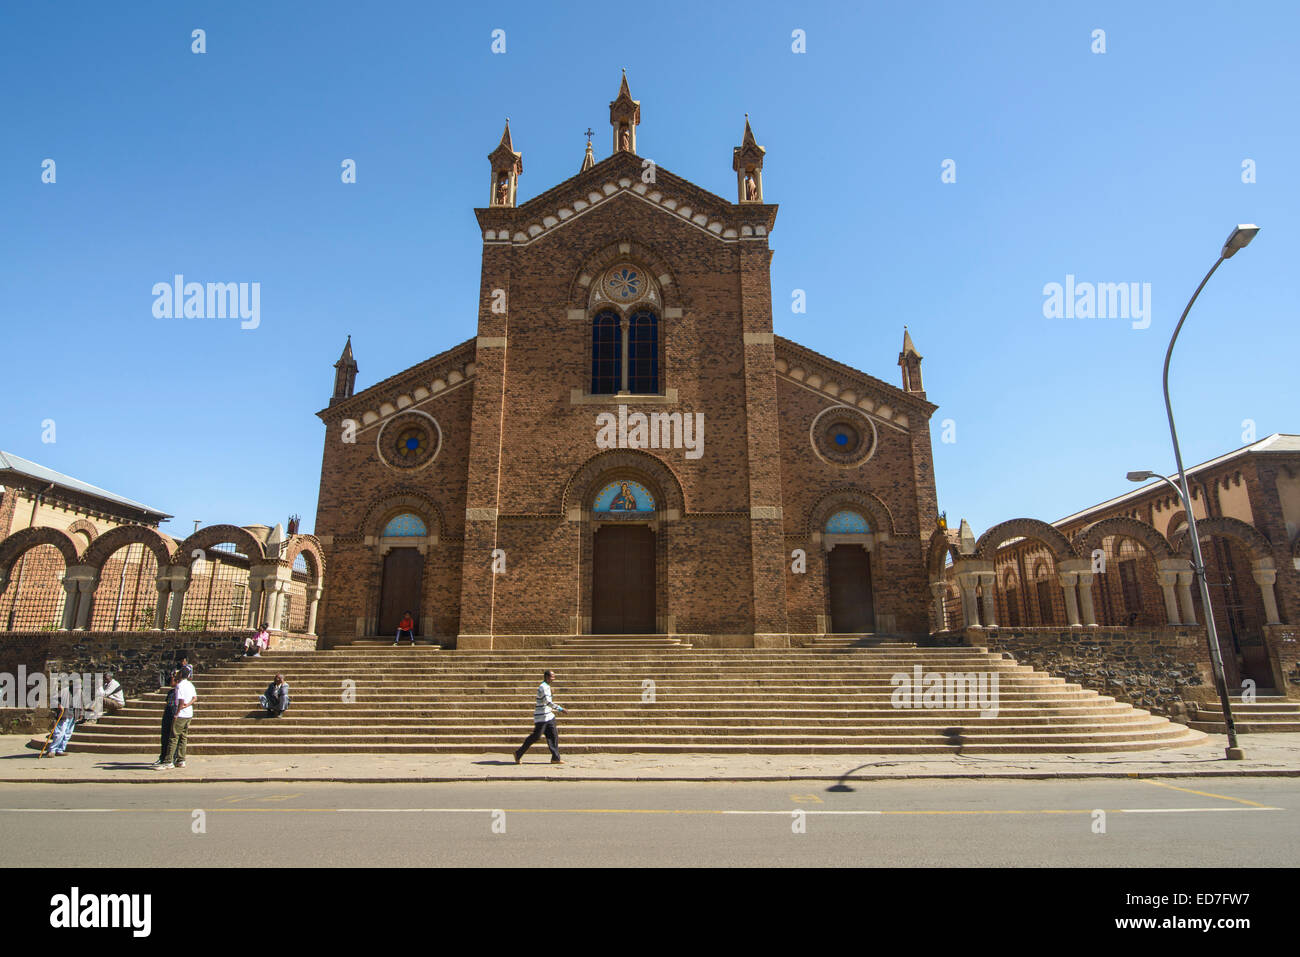 Katholische Kathedrale St. Marien Harnet Avenue, Asmara, Eritrea Stockfoto